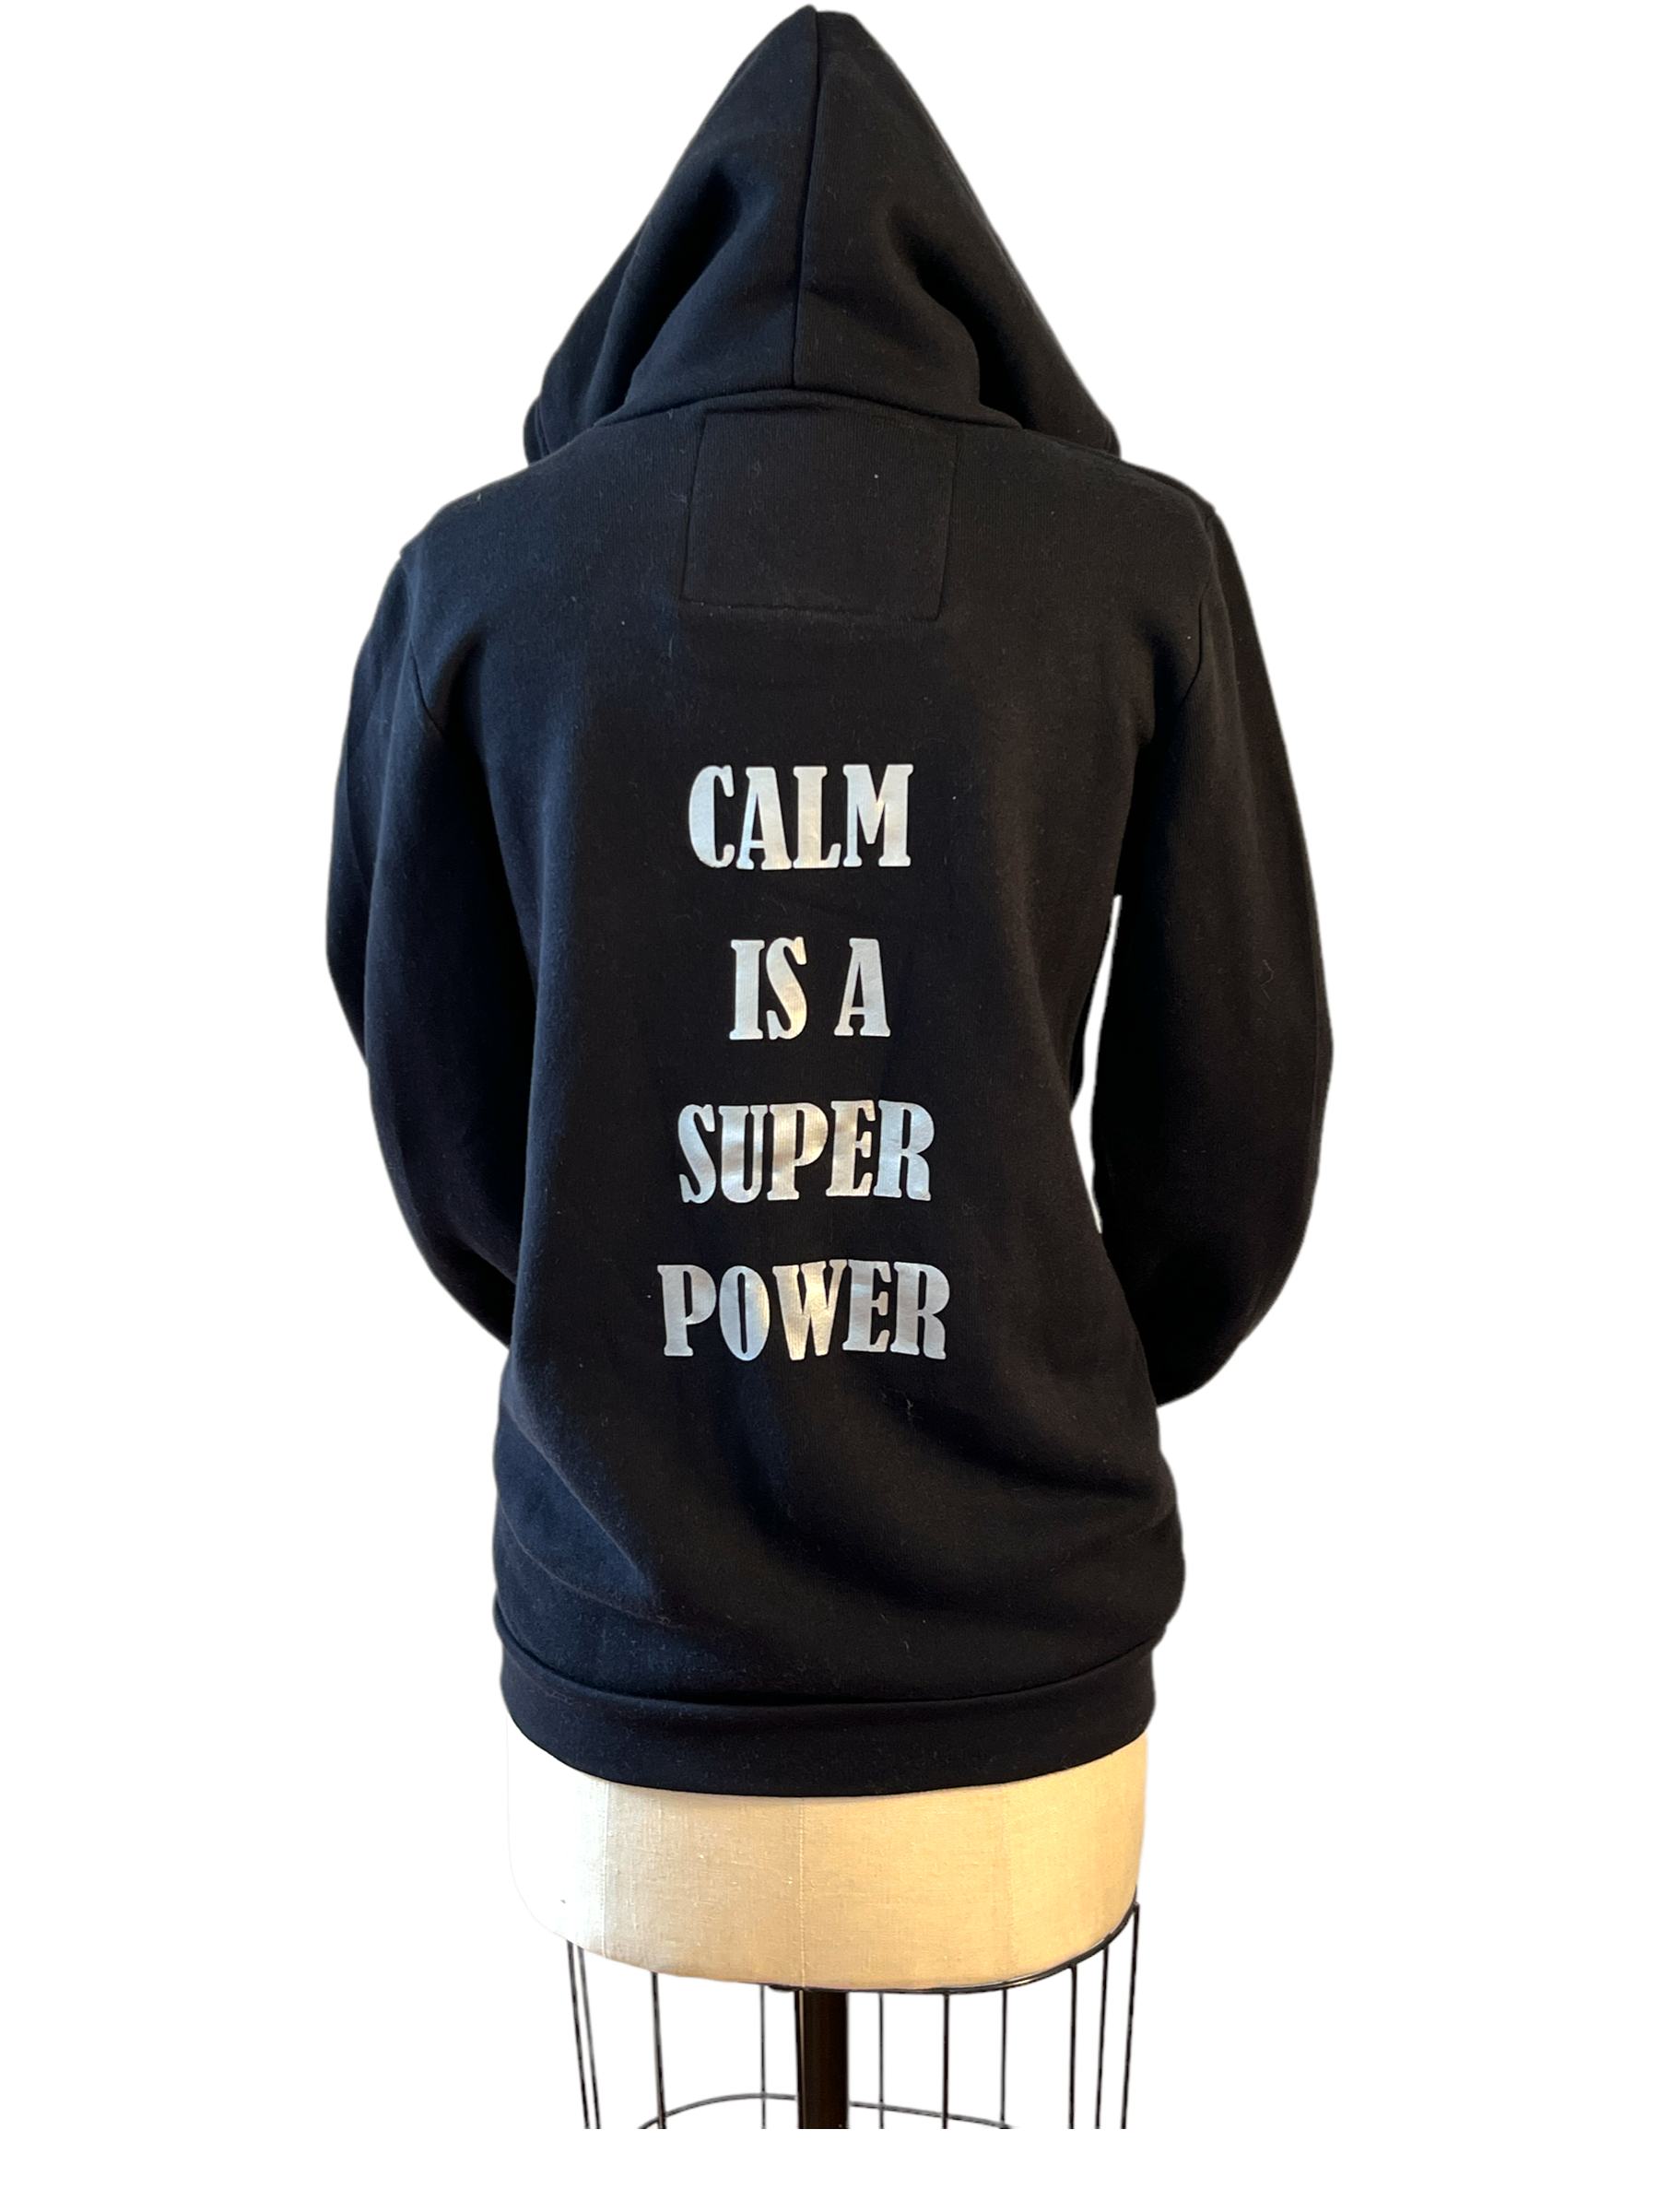 SSS "Calm is your SUPER POWER" Unisex Zip Hoodie-Black/Silver Metallic